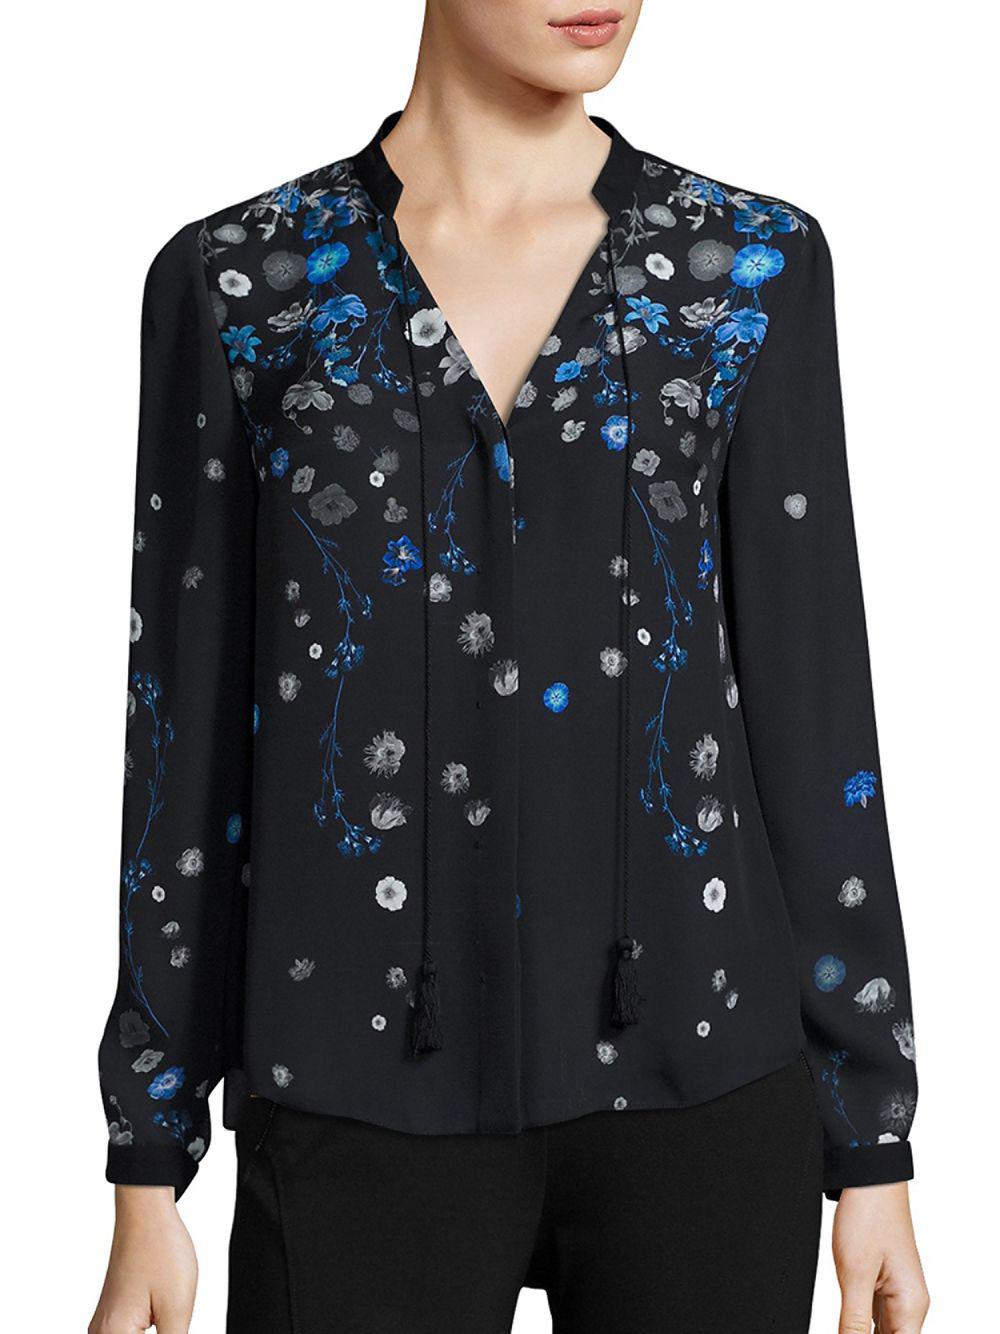 Elie Tahari Silk Floral Print Shirt in Black - Lyst